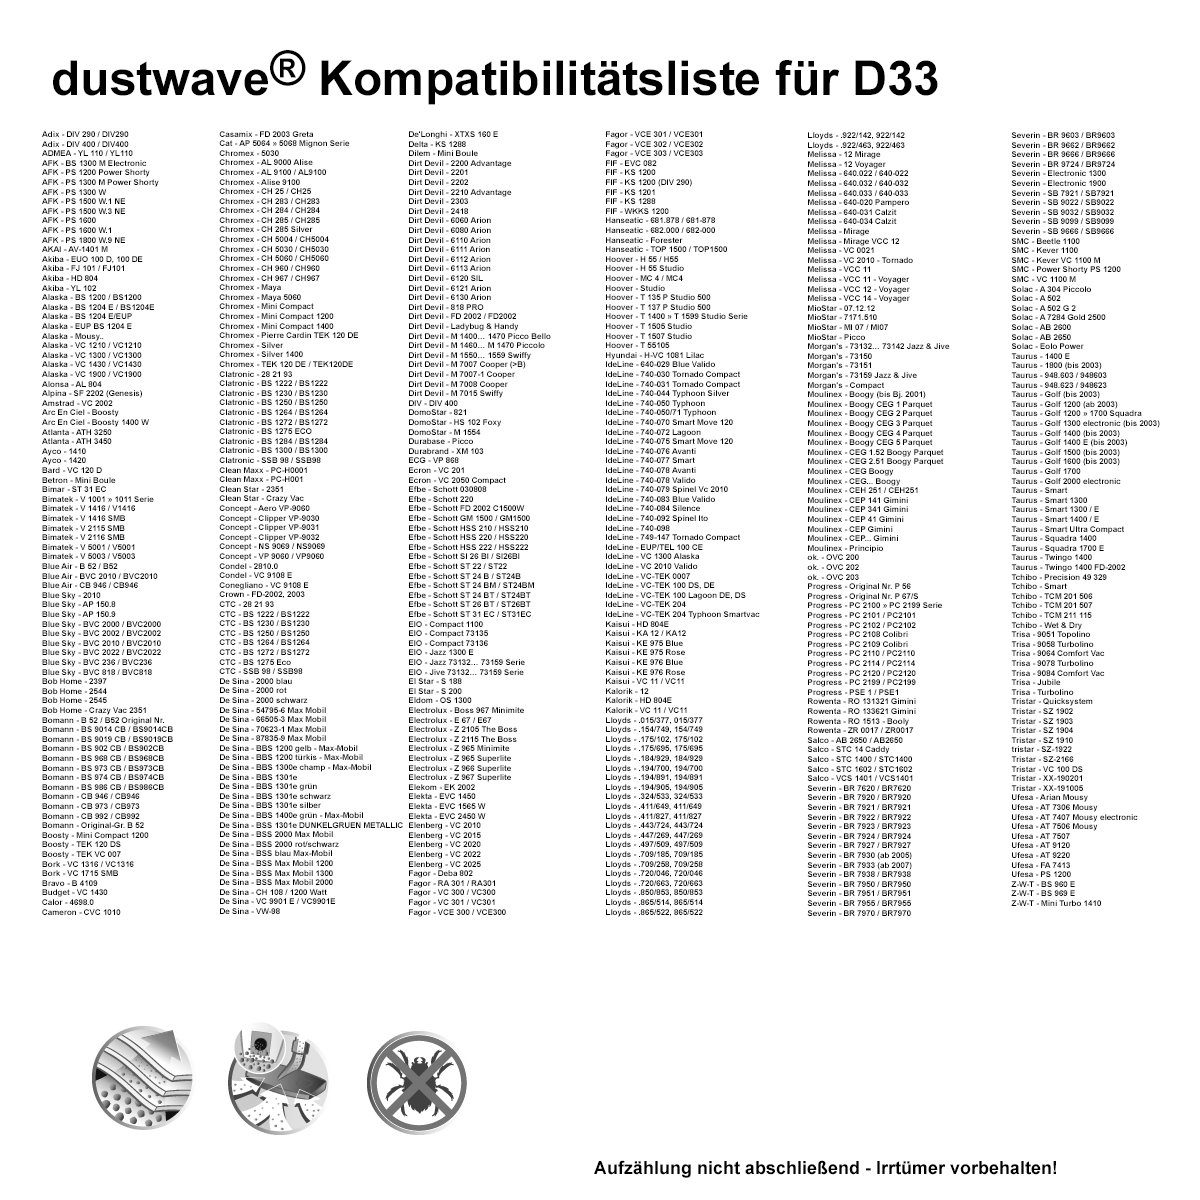 AL 804, Standard Alonsa Dustwave 1 15x15cm (ca. AL 1 Staubsaugerbeutel Test-Set, 804 passend Staubsaugerbeutel Hepa-Filter - 1 - + für Test-Set, zuschneidbar) St., Alonsa